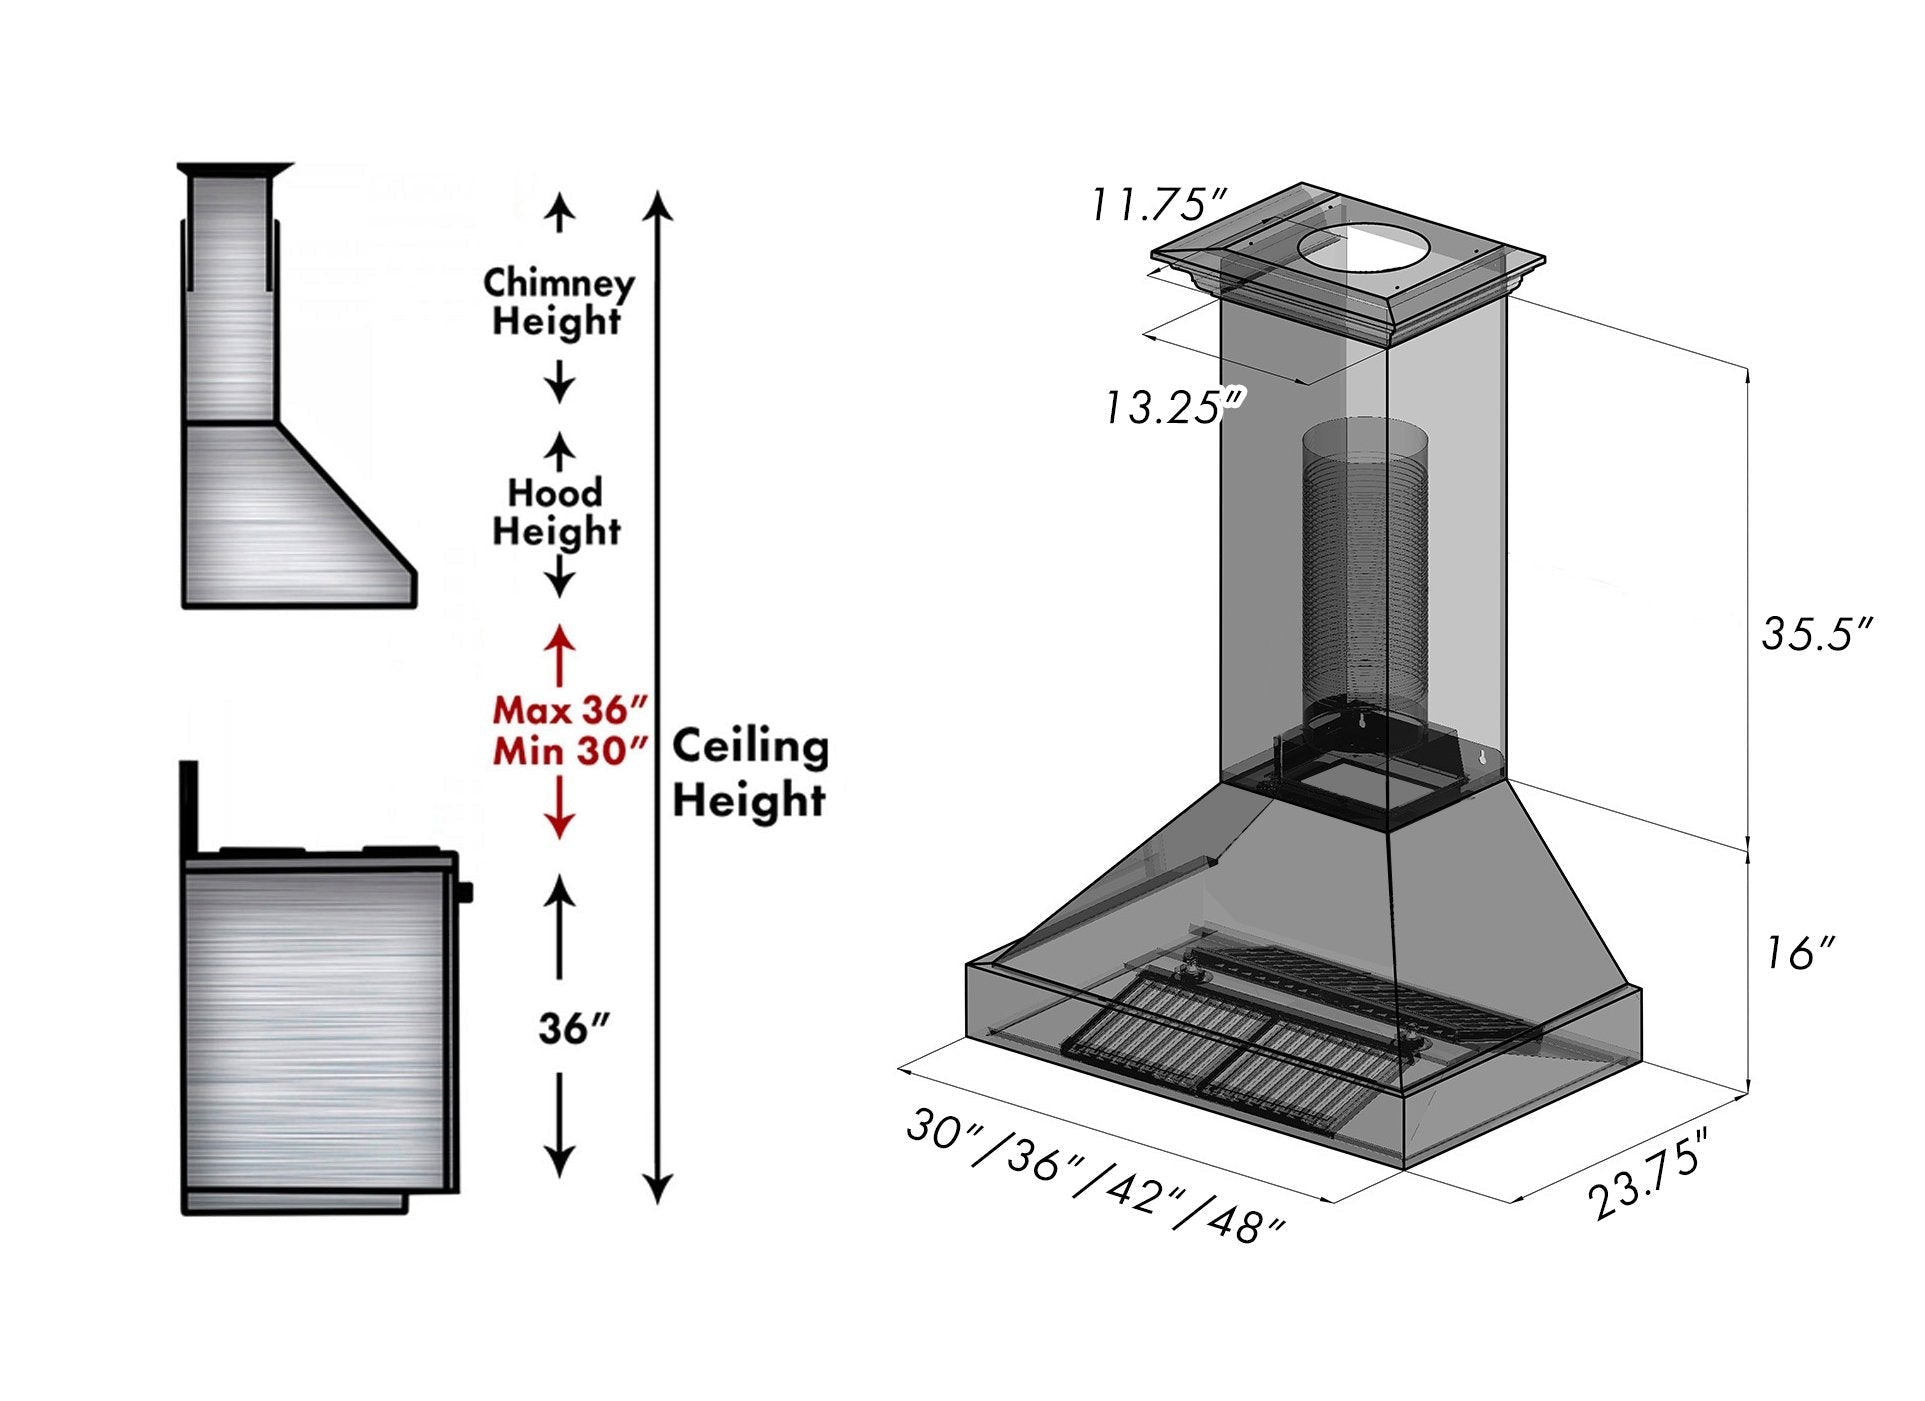 ZLINE Fingerprint Resistant Stainless Steel Range Hood (8654SN) dimensional diagram and chimney height guide.